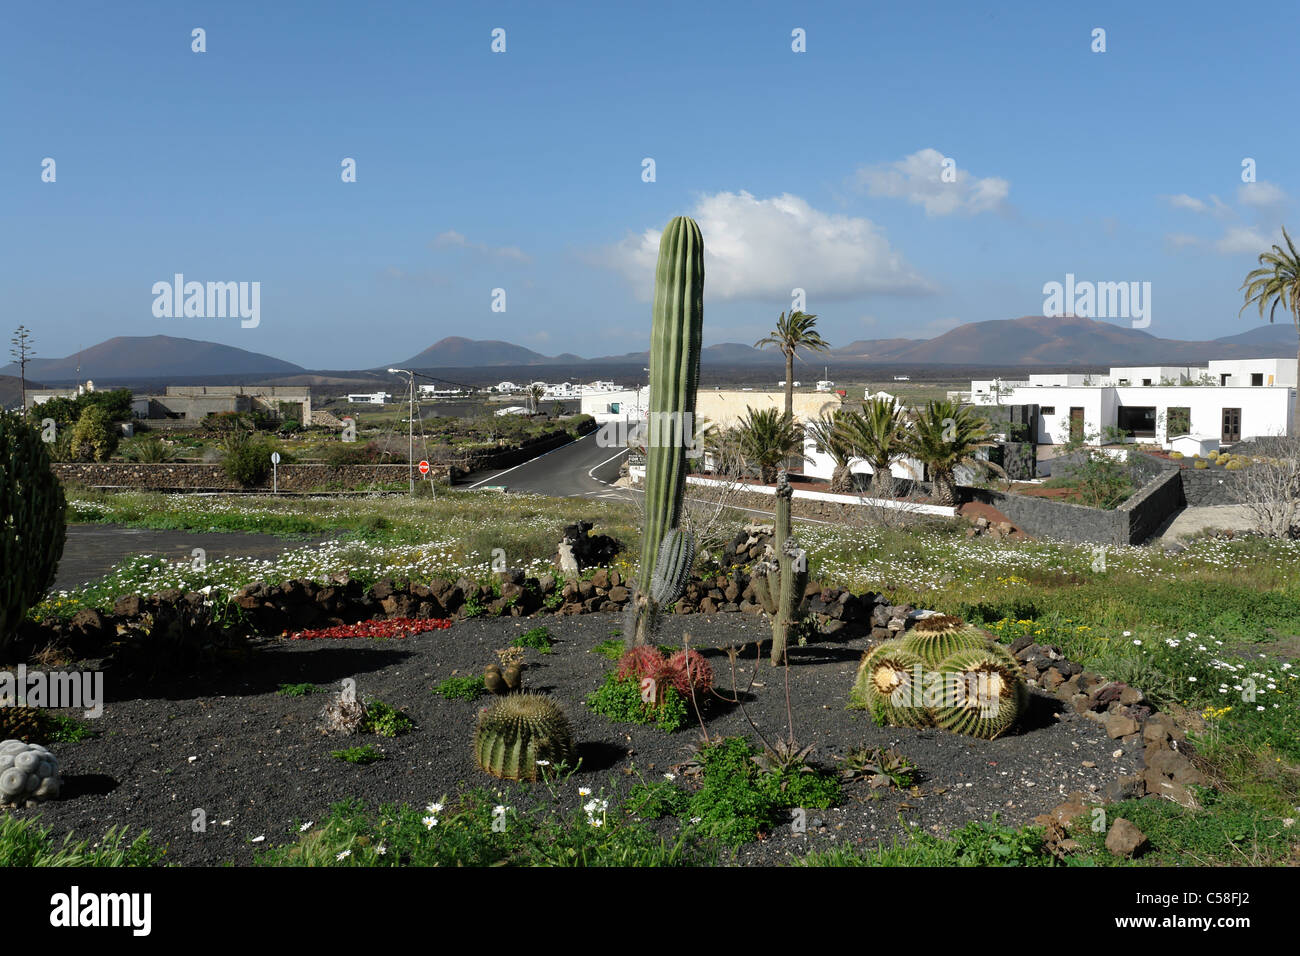 España, Lanzarote, Yaiza, vista local, casas típicas, casas, palmeras, cactus garden, construcción, detalle, árboles, plantas, Foto de stock